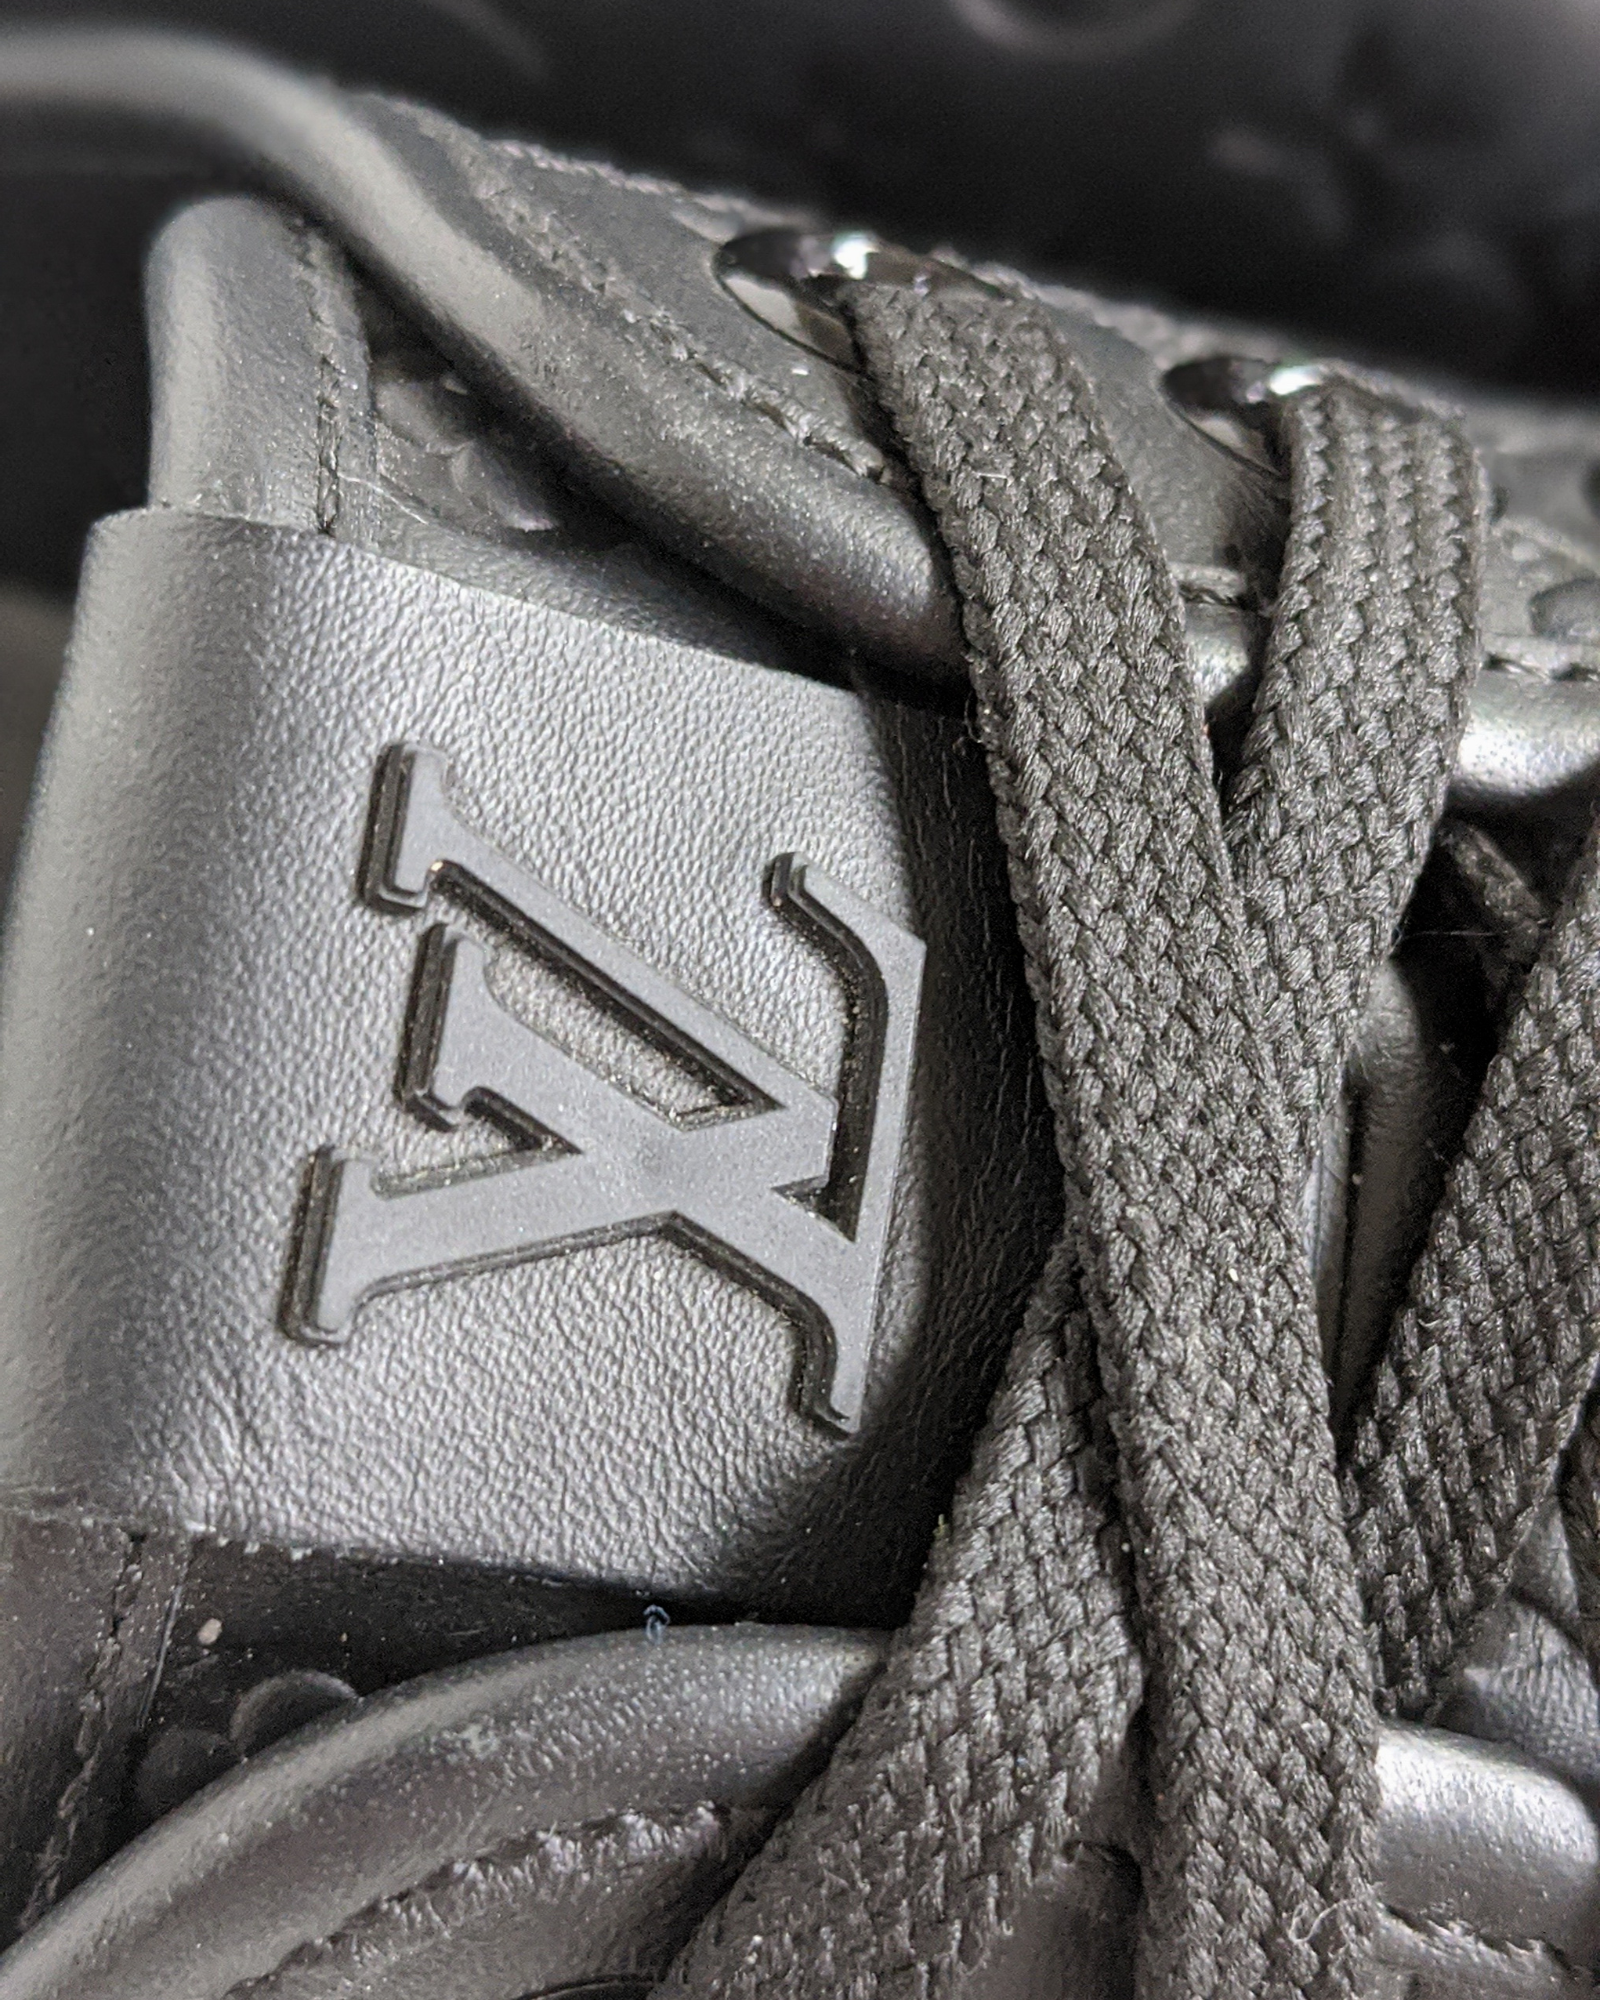 Louis Vuitton Black Monogram Embossed Calfskin Punchy Sneakers - 36 - RETYCHE